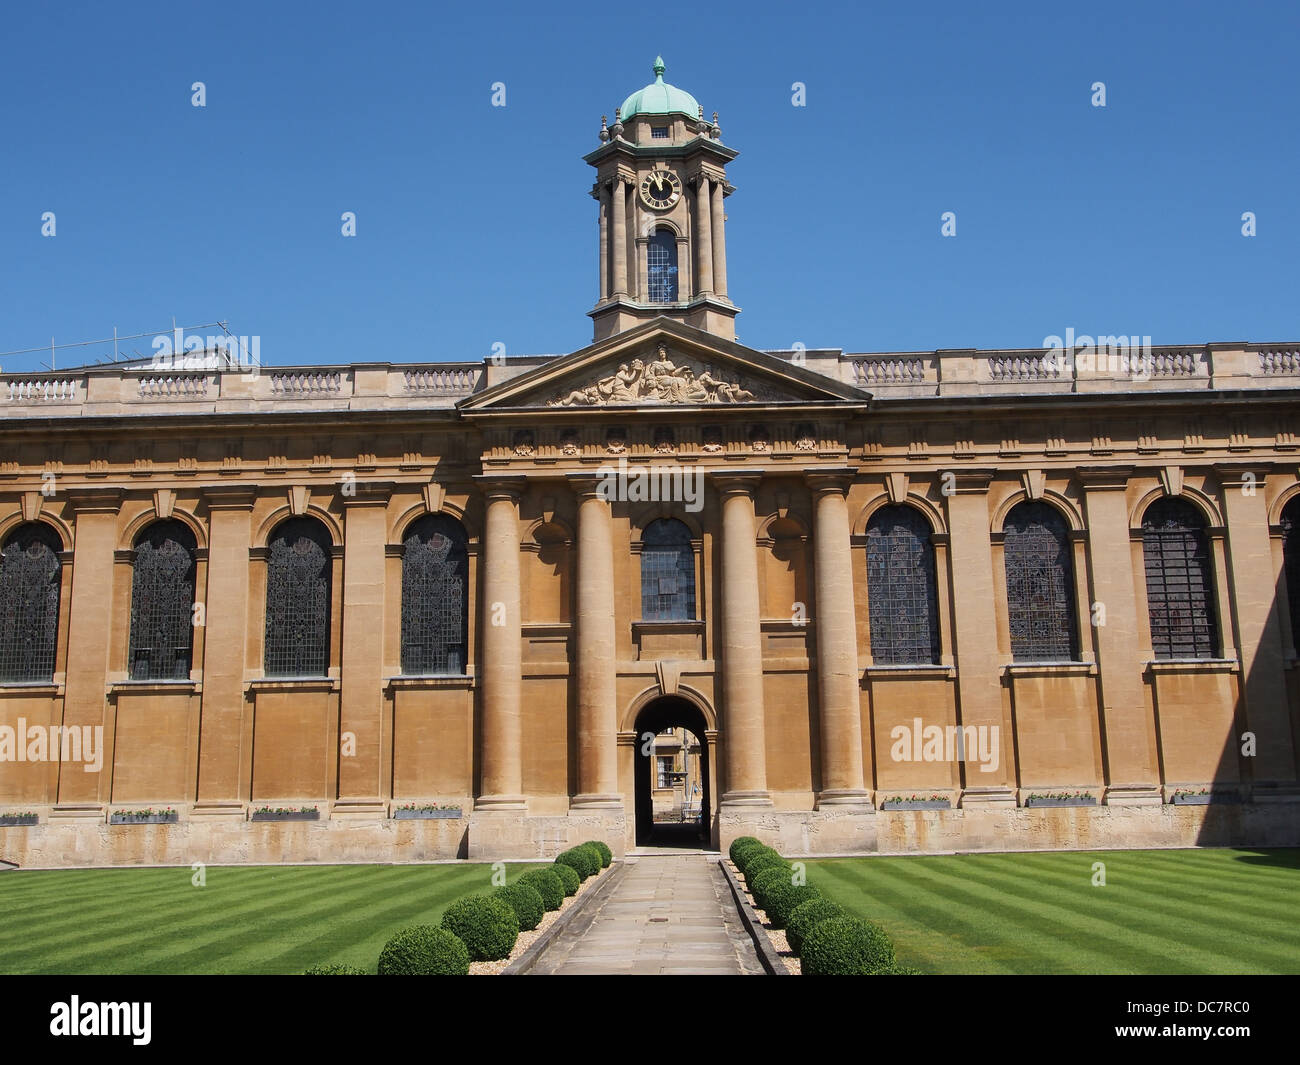 Queen's College Quad, Oxford University courtyard Stock Photo